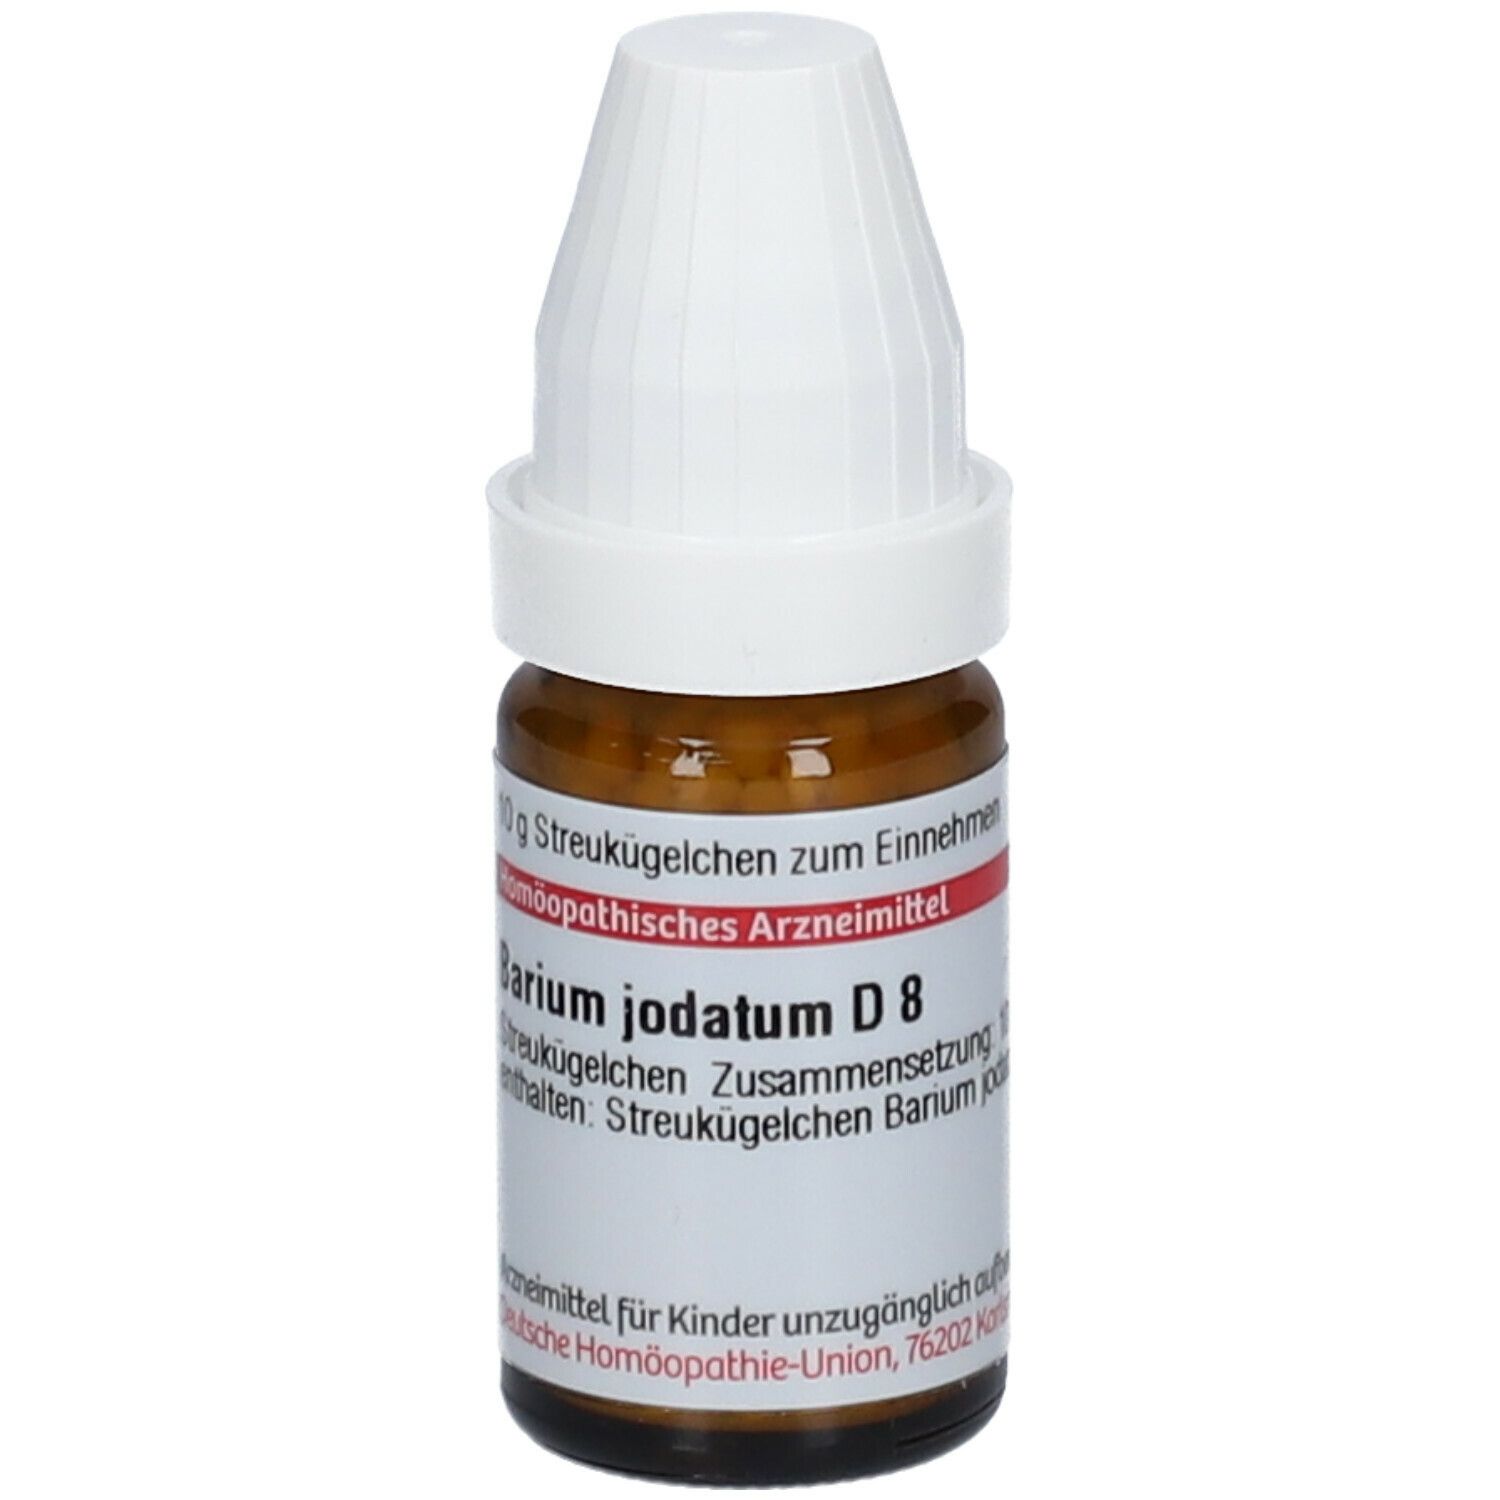 DHU Barium Jodatum D8